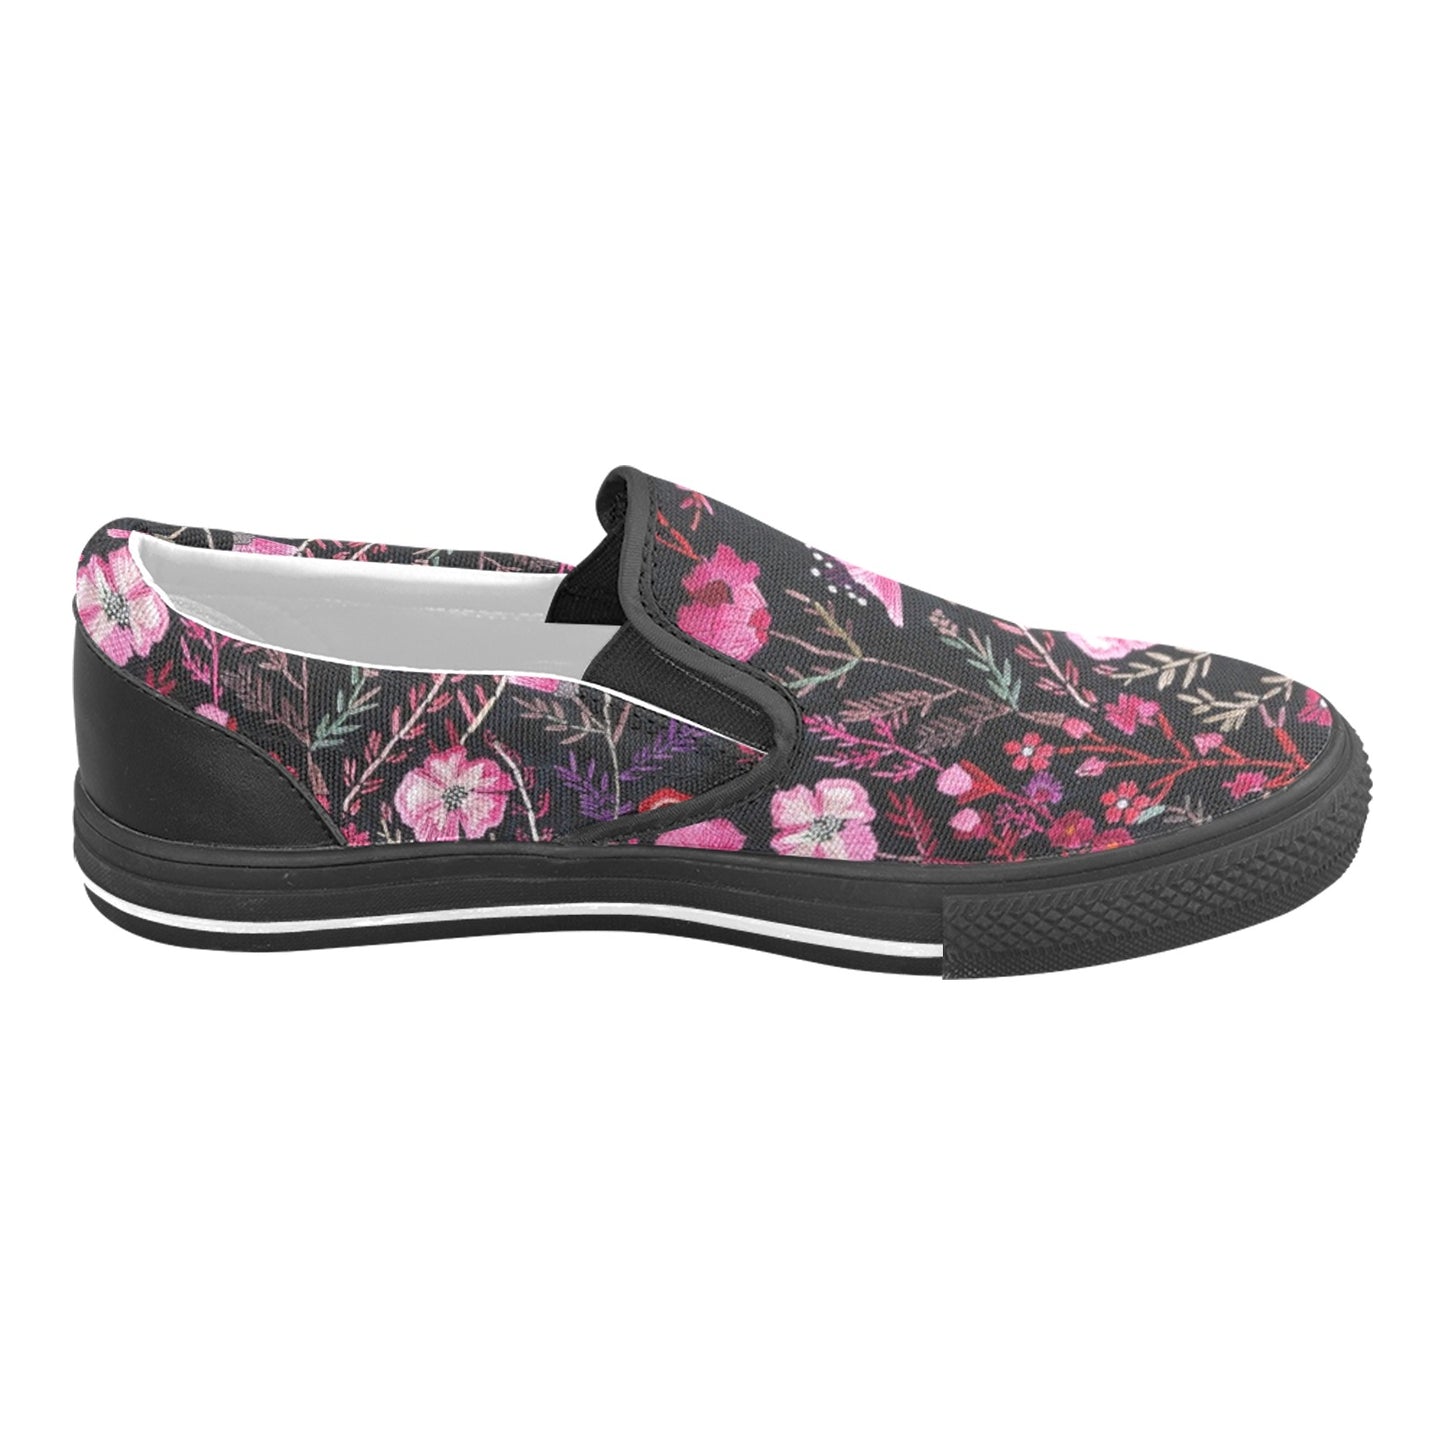 Pink Floral Women Slip On Shoes, Flowers Canvas Festival Sneakers Black Low Top Casual Ladies Aesthetic Designer Flat Slide On Comfortable